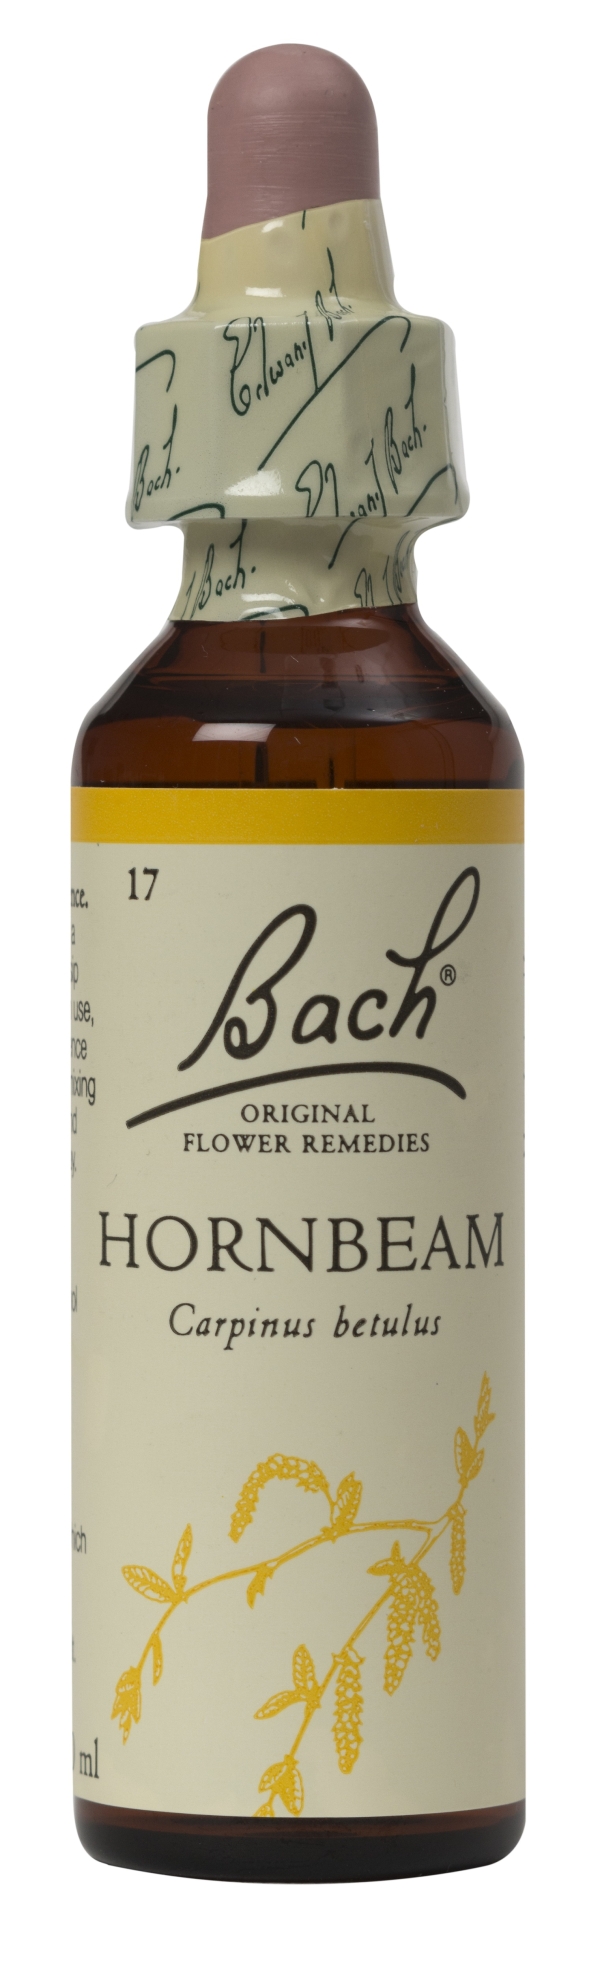 Nelson Bach Flower Remedies: Bach Hornbeam Flower Remedy (20ml) available online here